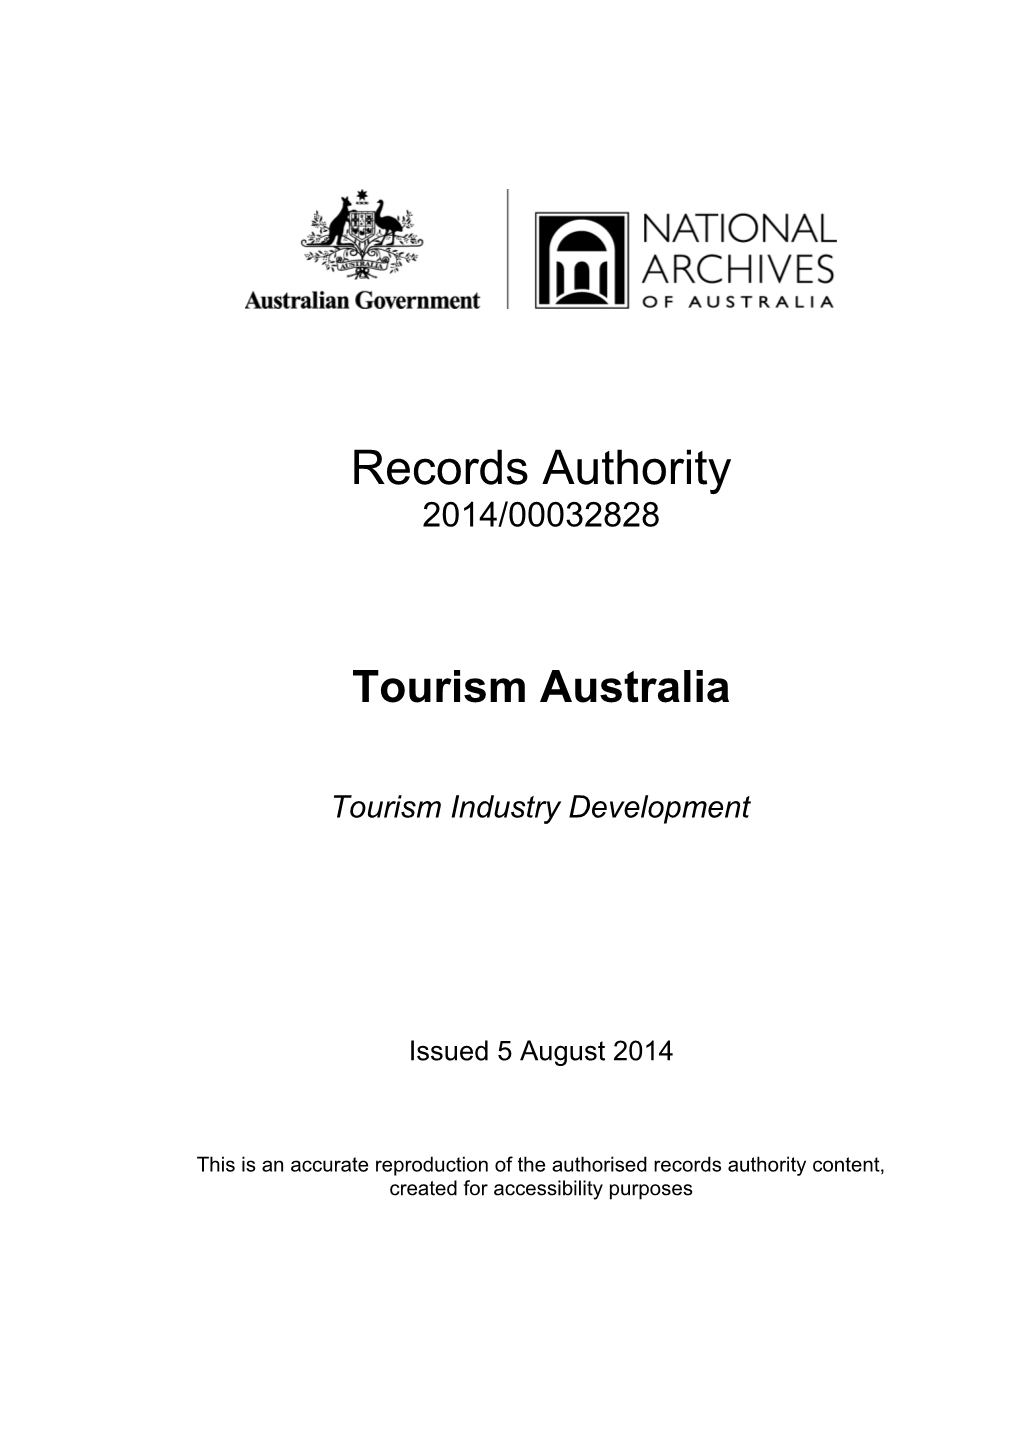 Tourism Australia Tourism Industry Development 2014/00032828